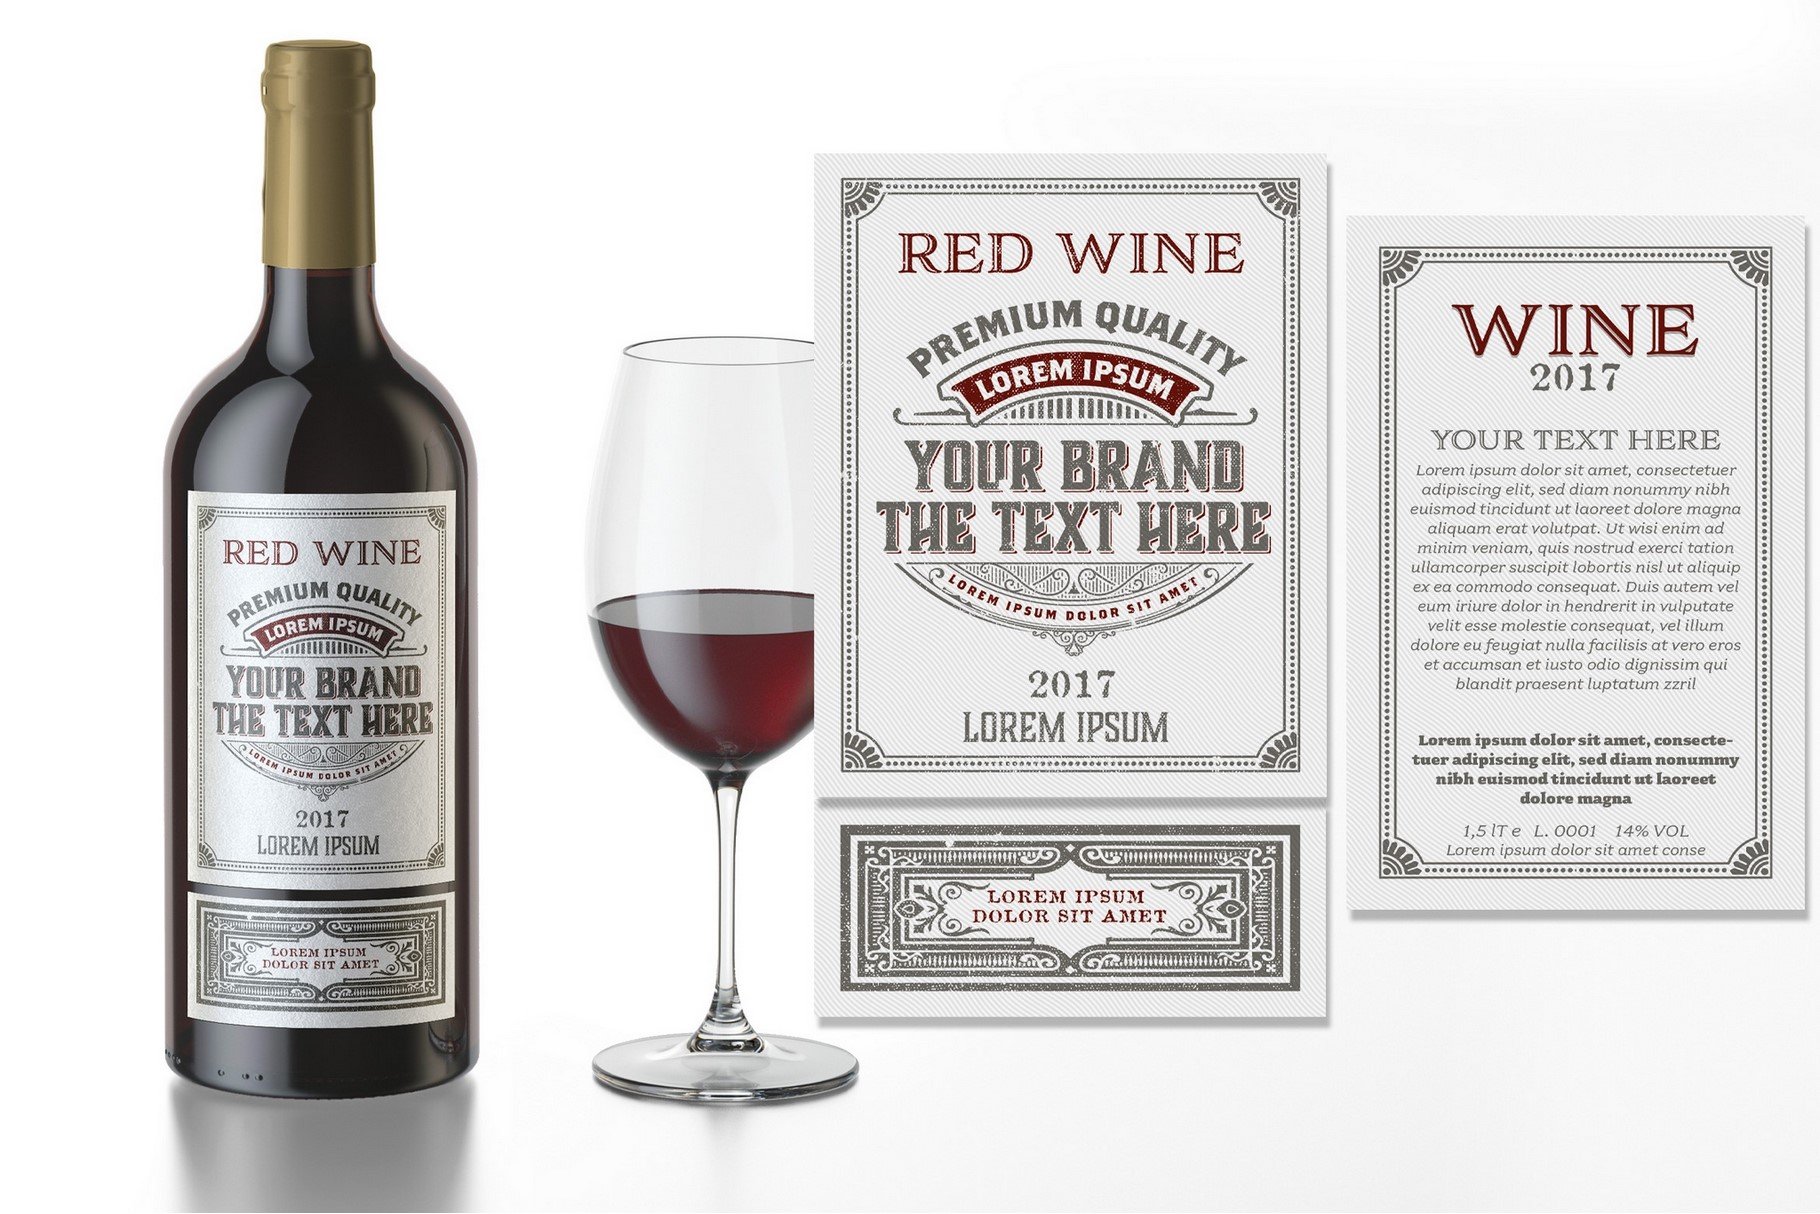 Vintage wine label cover image.